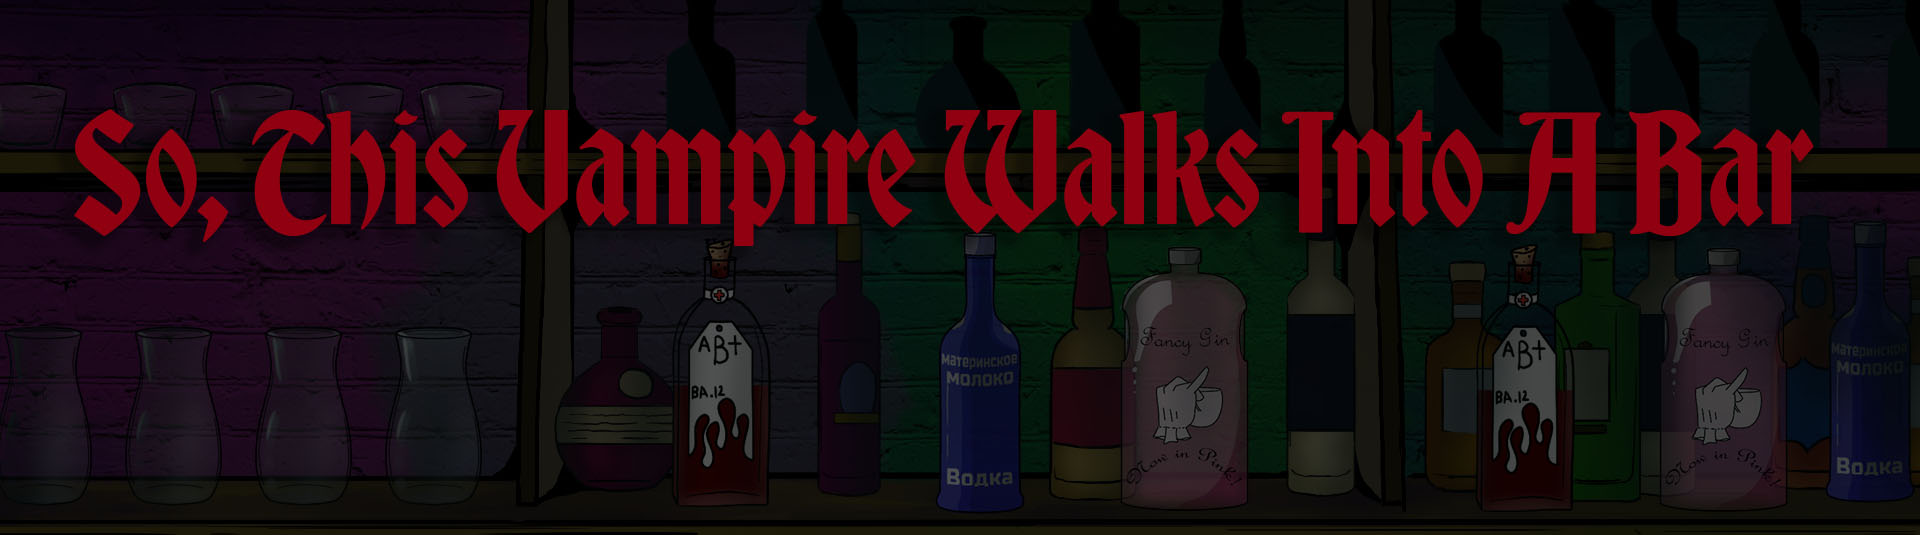 So, this Vampire Walks into a Bar